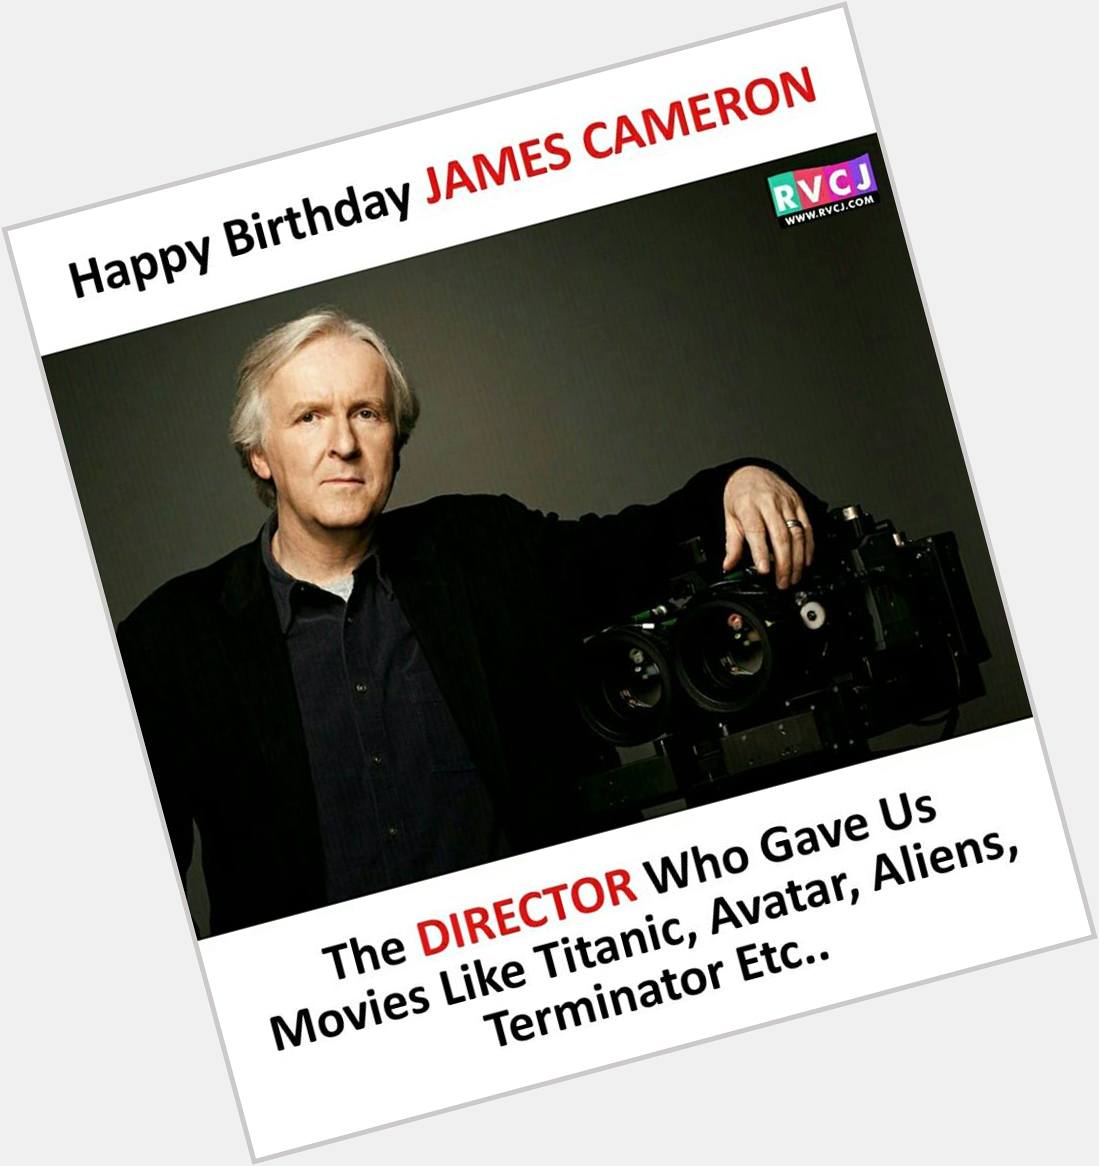 Happy birthday James Cameron : The director of Titanic & Avatar 